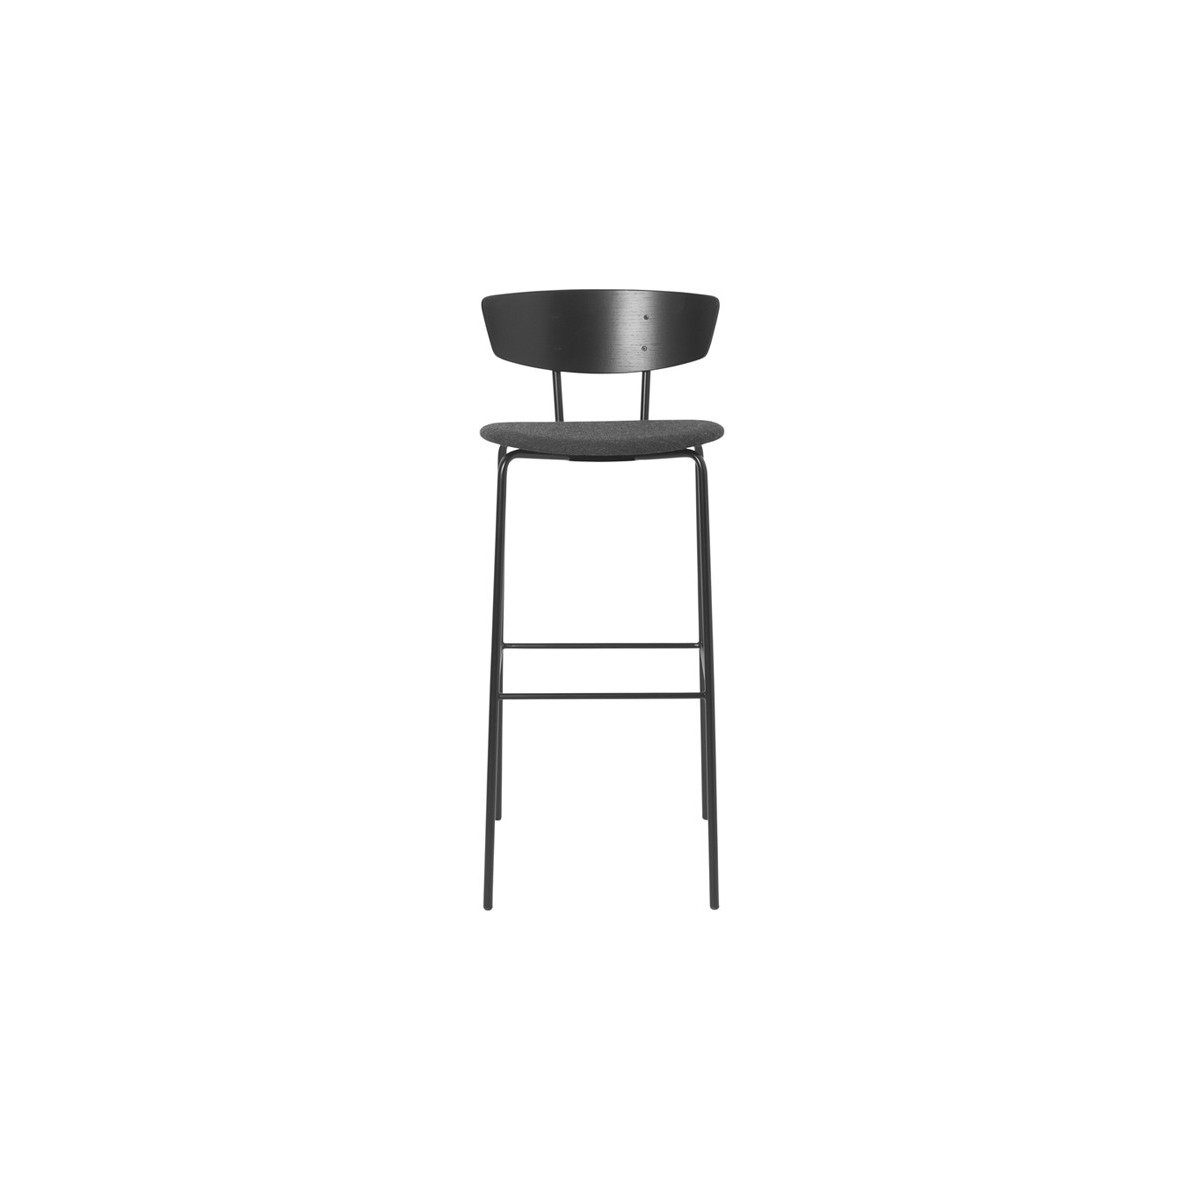 H76cm - black / dark grey - Herman bar stool upholstered